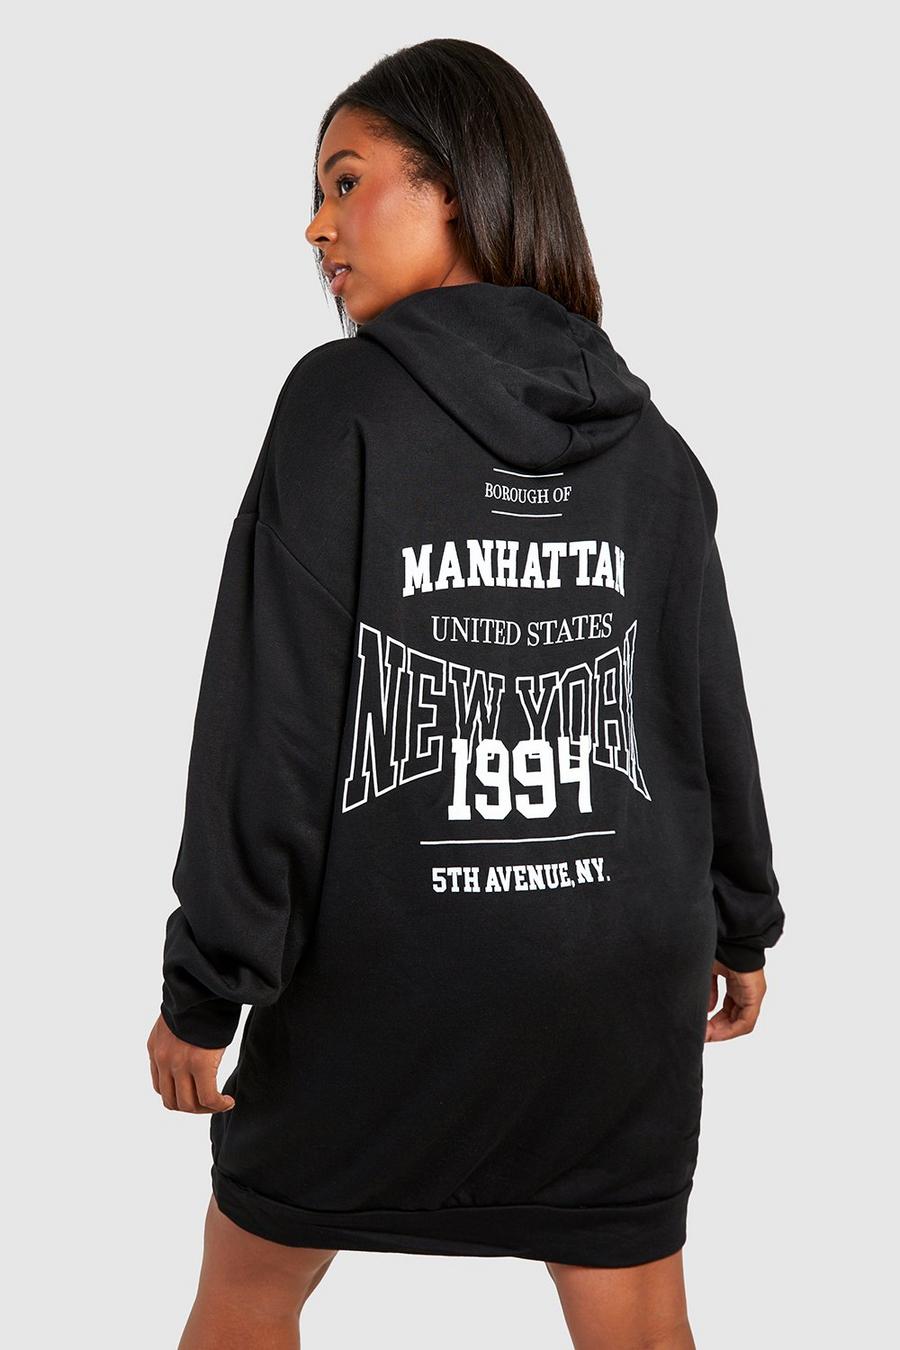 Grande taille - Robe en sweat à capuche à slogan New York, Black